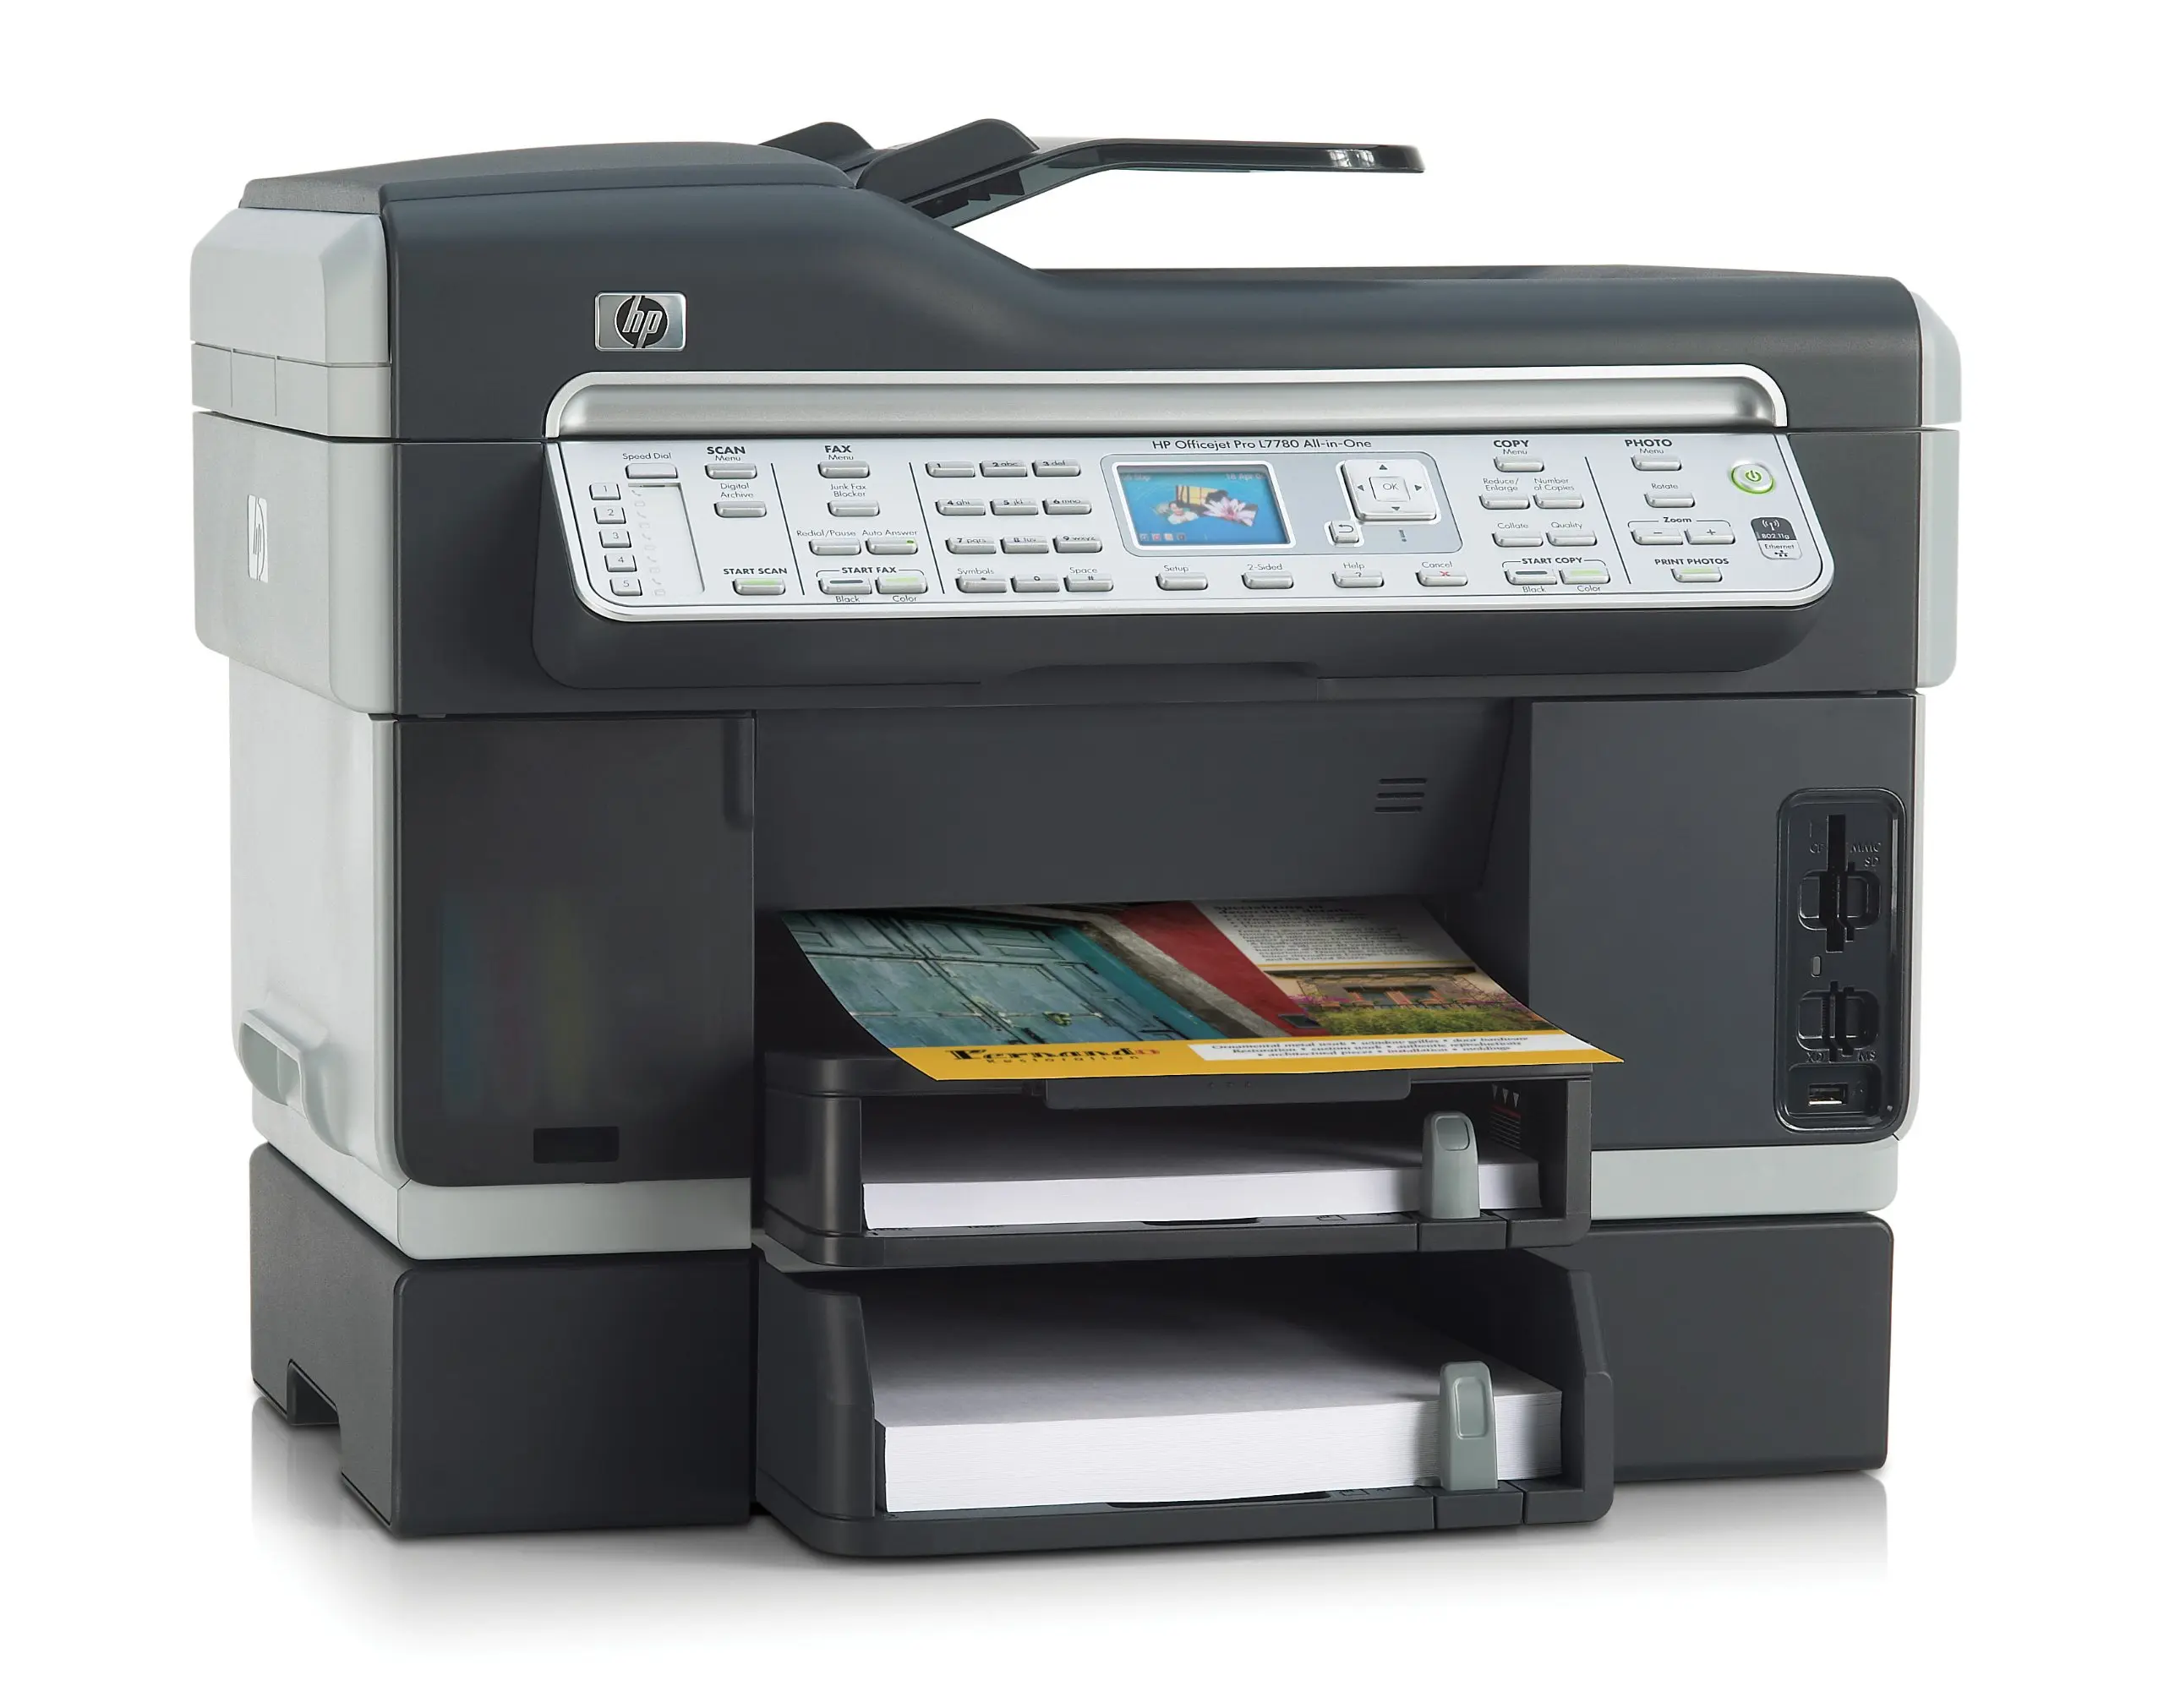 hewlett packard l7680 printer driver download - How to install HP 9012e printer